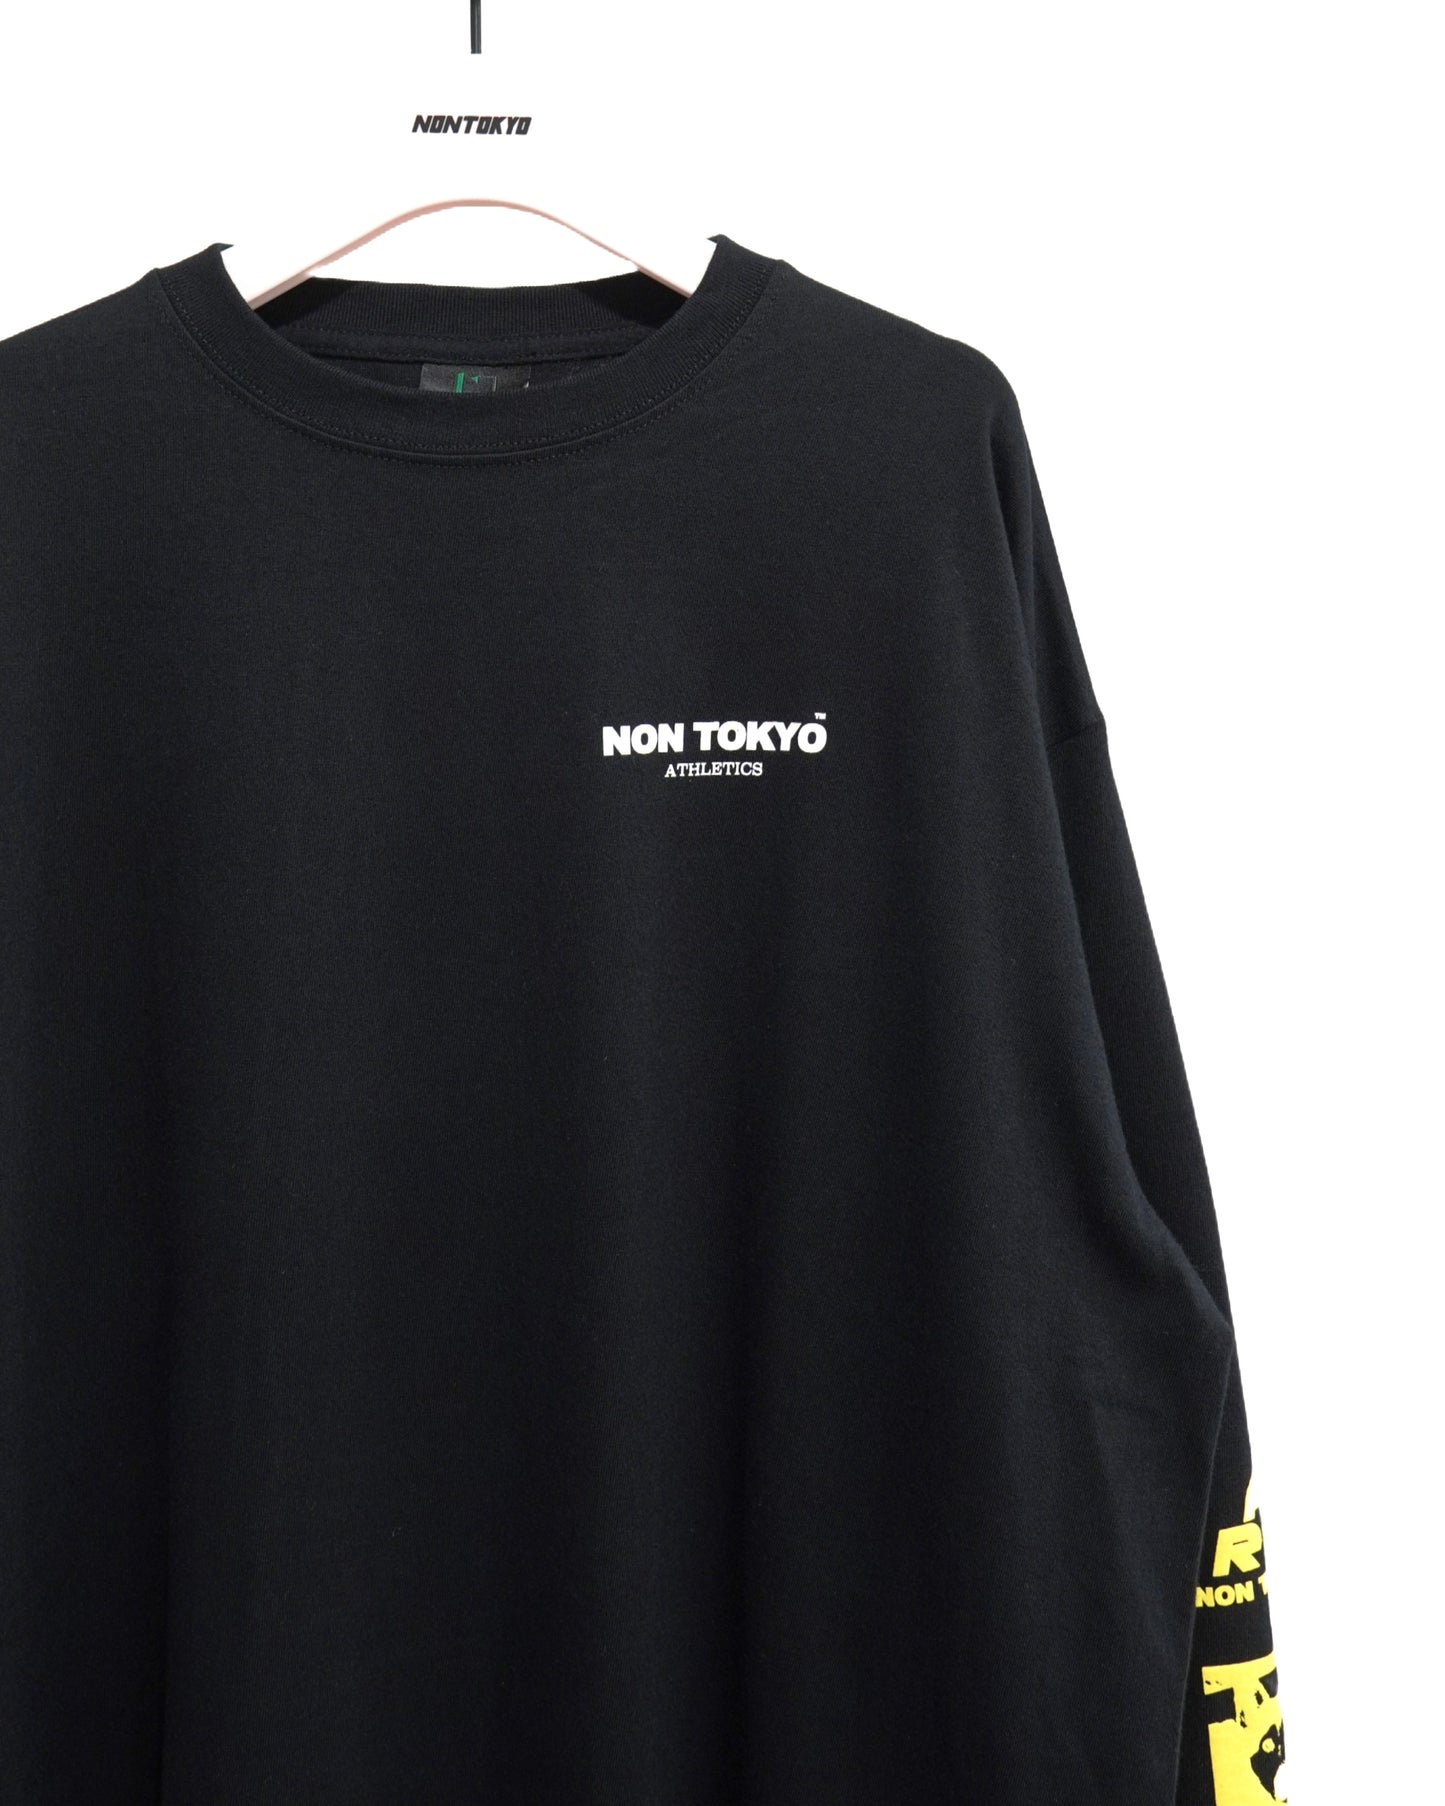 NON TOKYO /  PRINT L/S T-SHIRT (SLEEVE / BLACK ) / 〈ノントーキョー〉プリントロングスリーブTシャツ (スリーブ / ブラック)